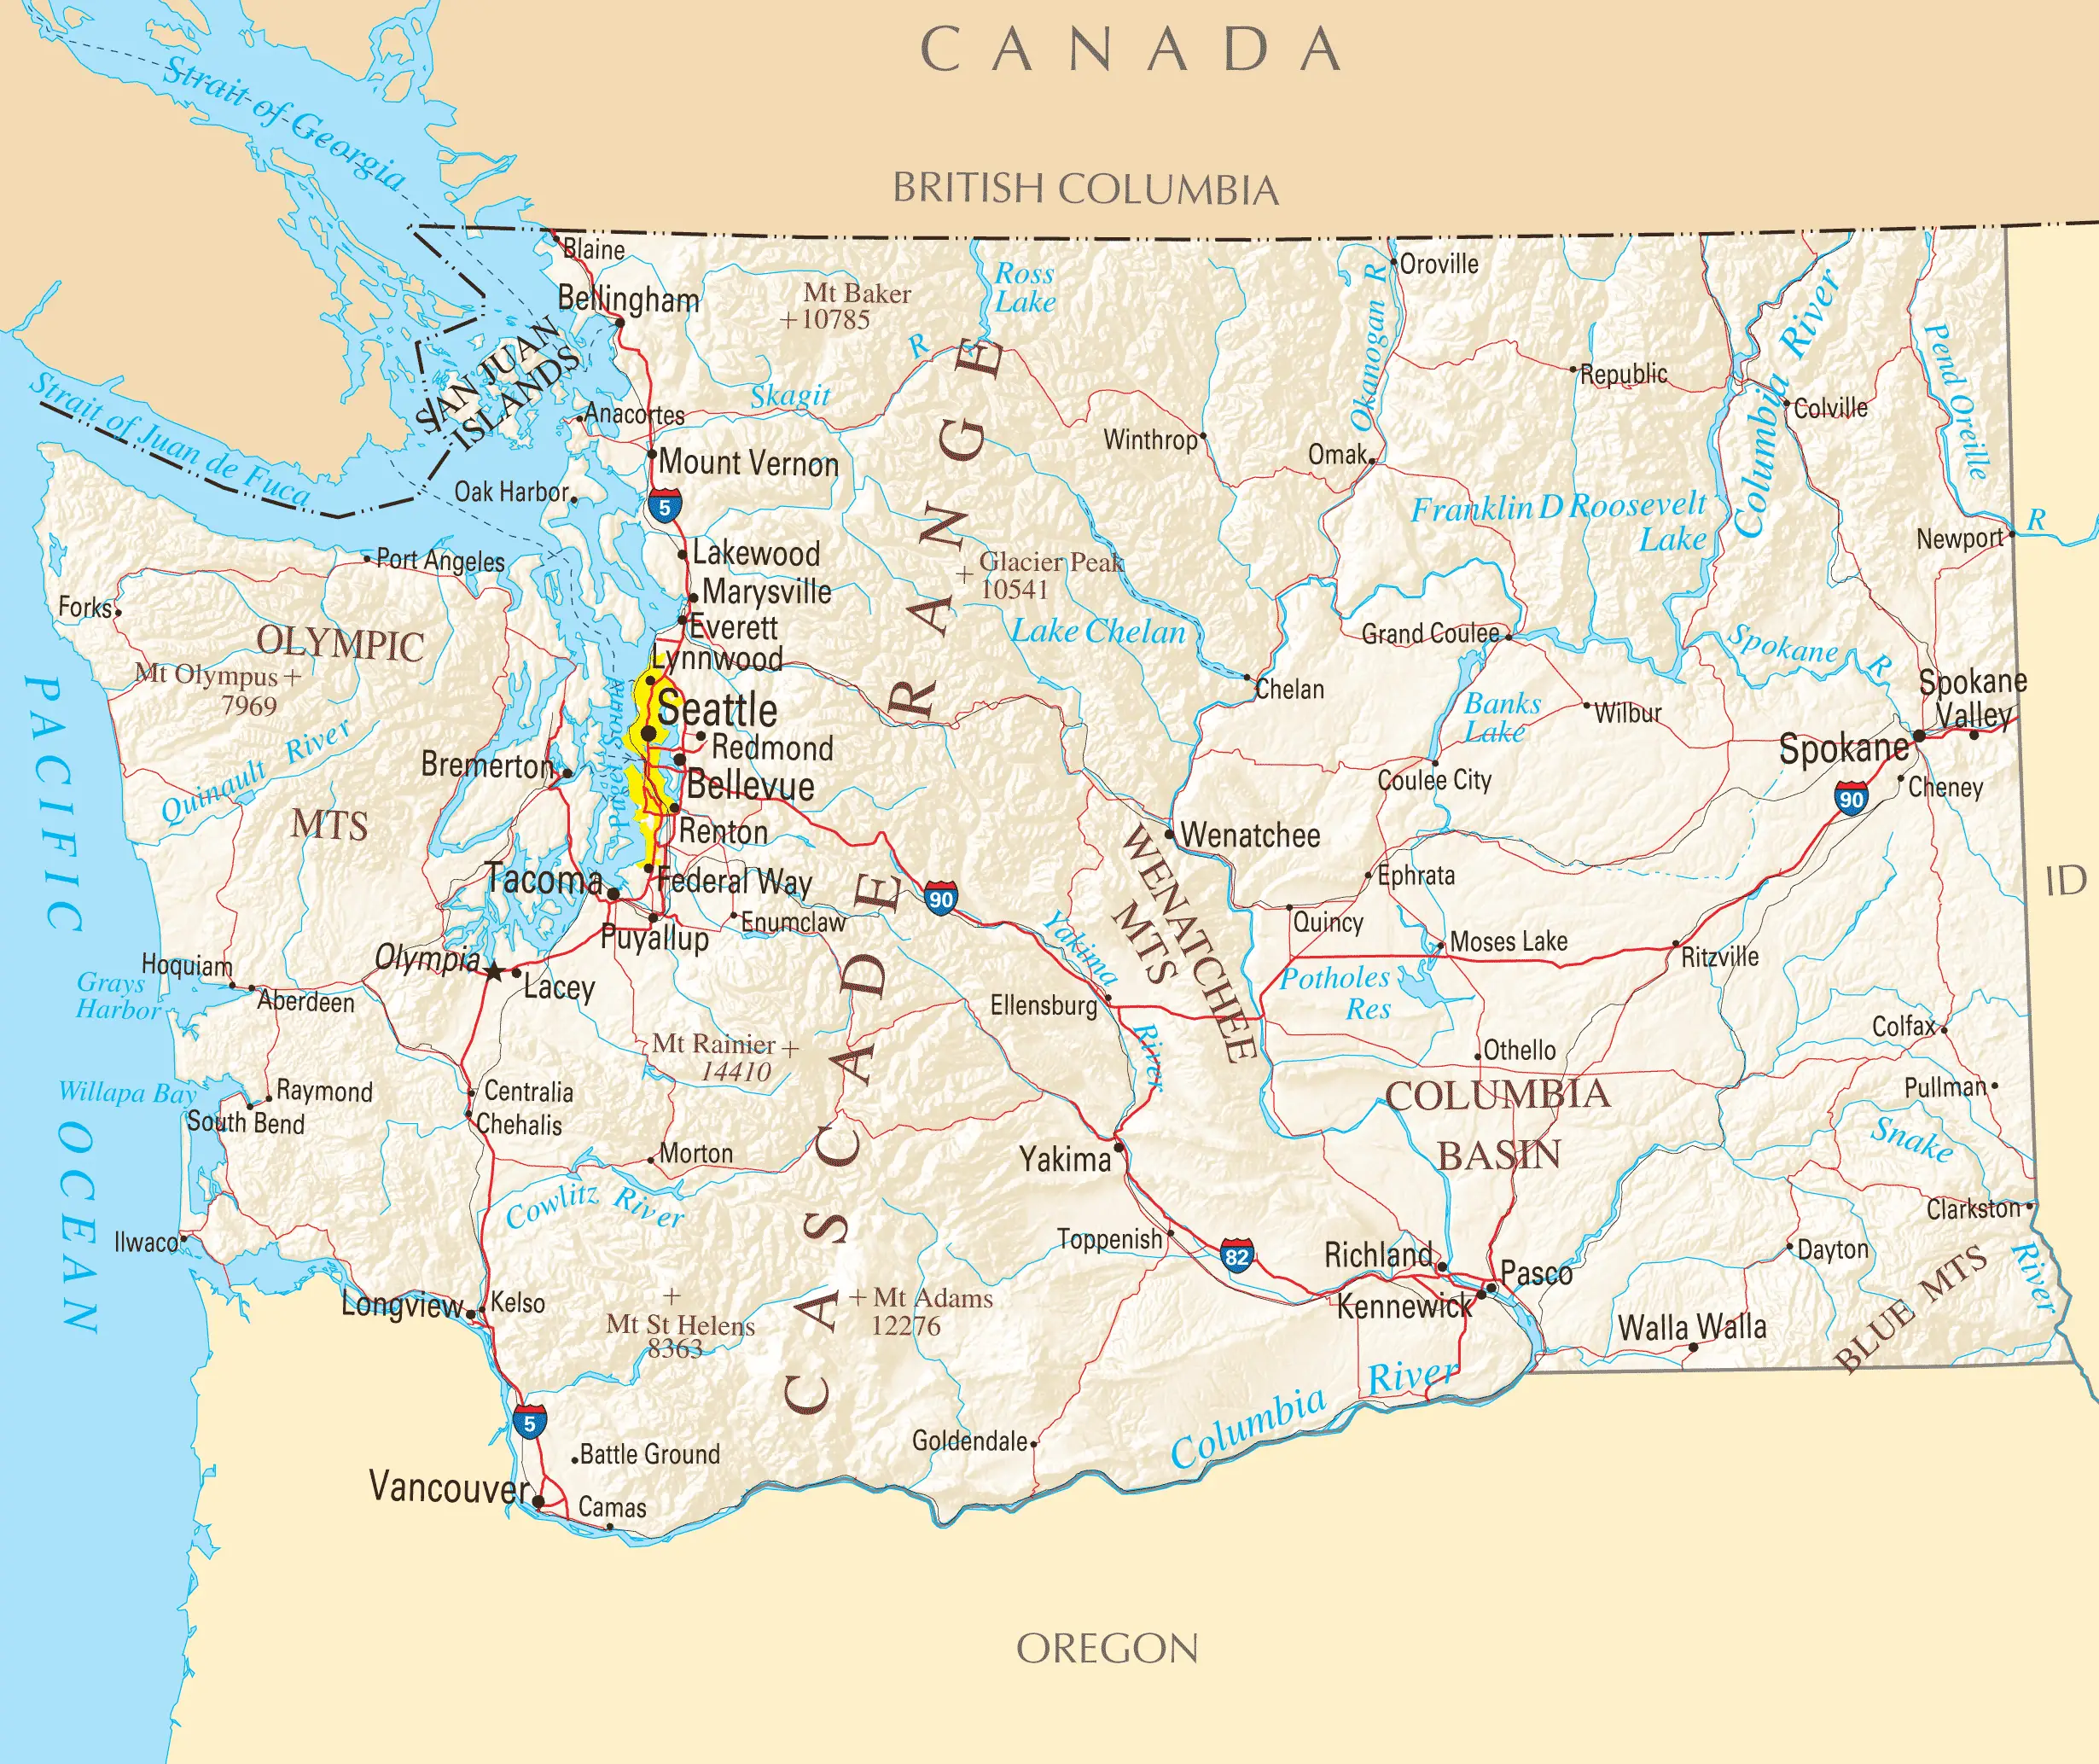 Washington Reference Map